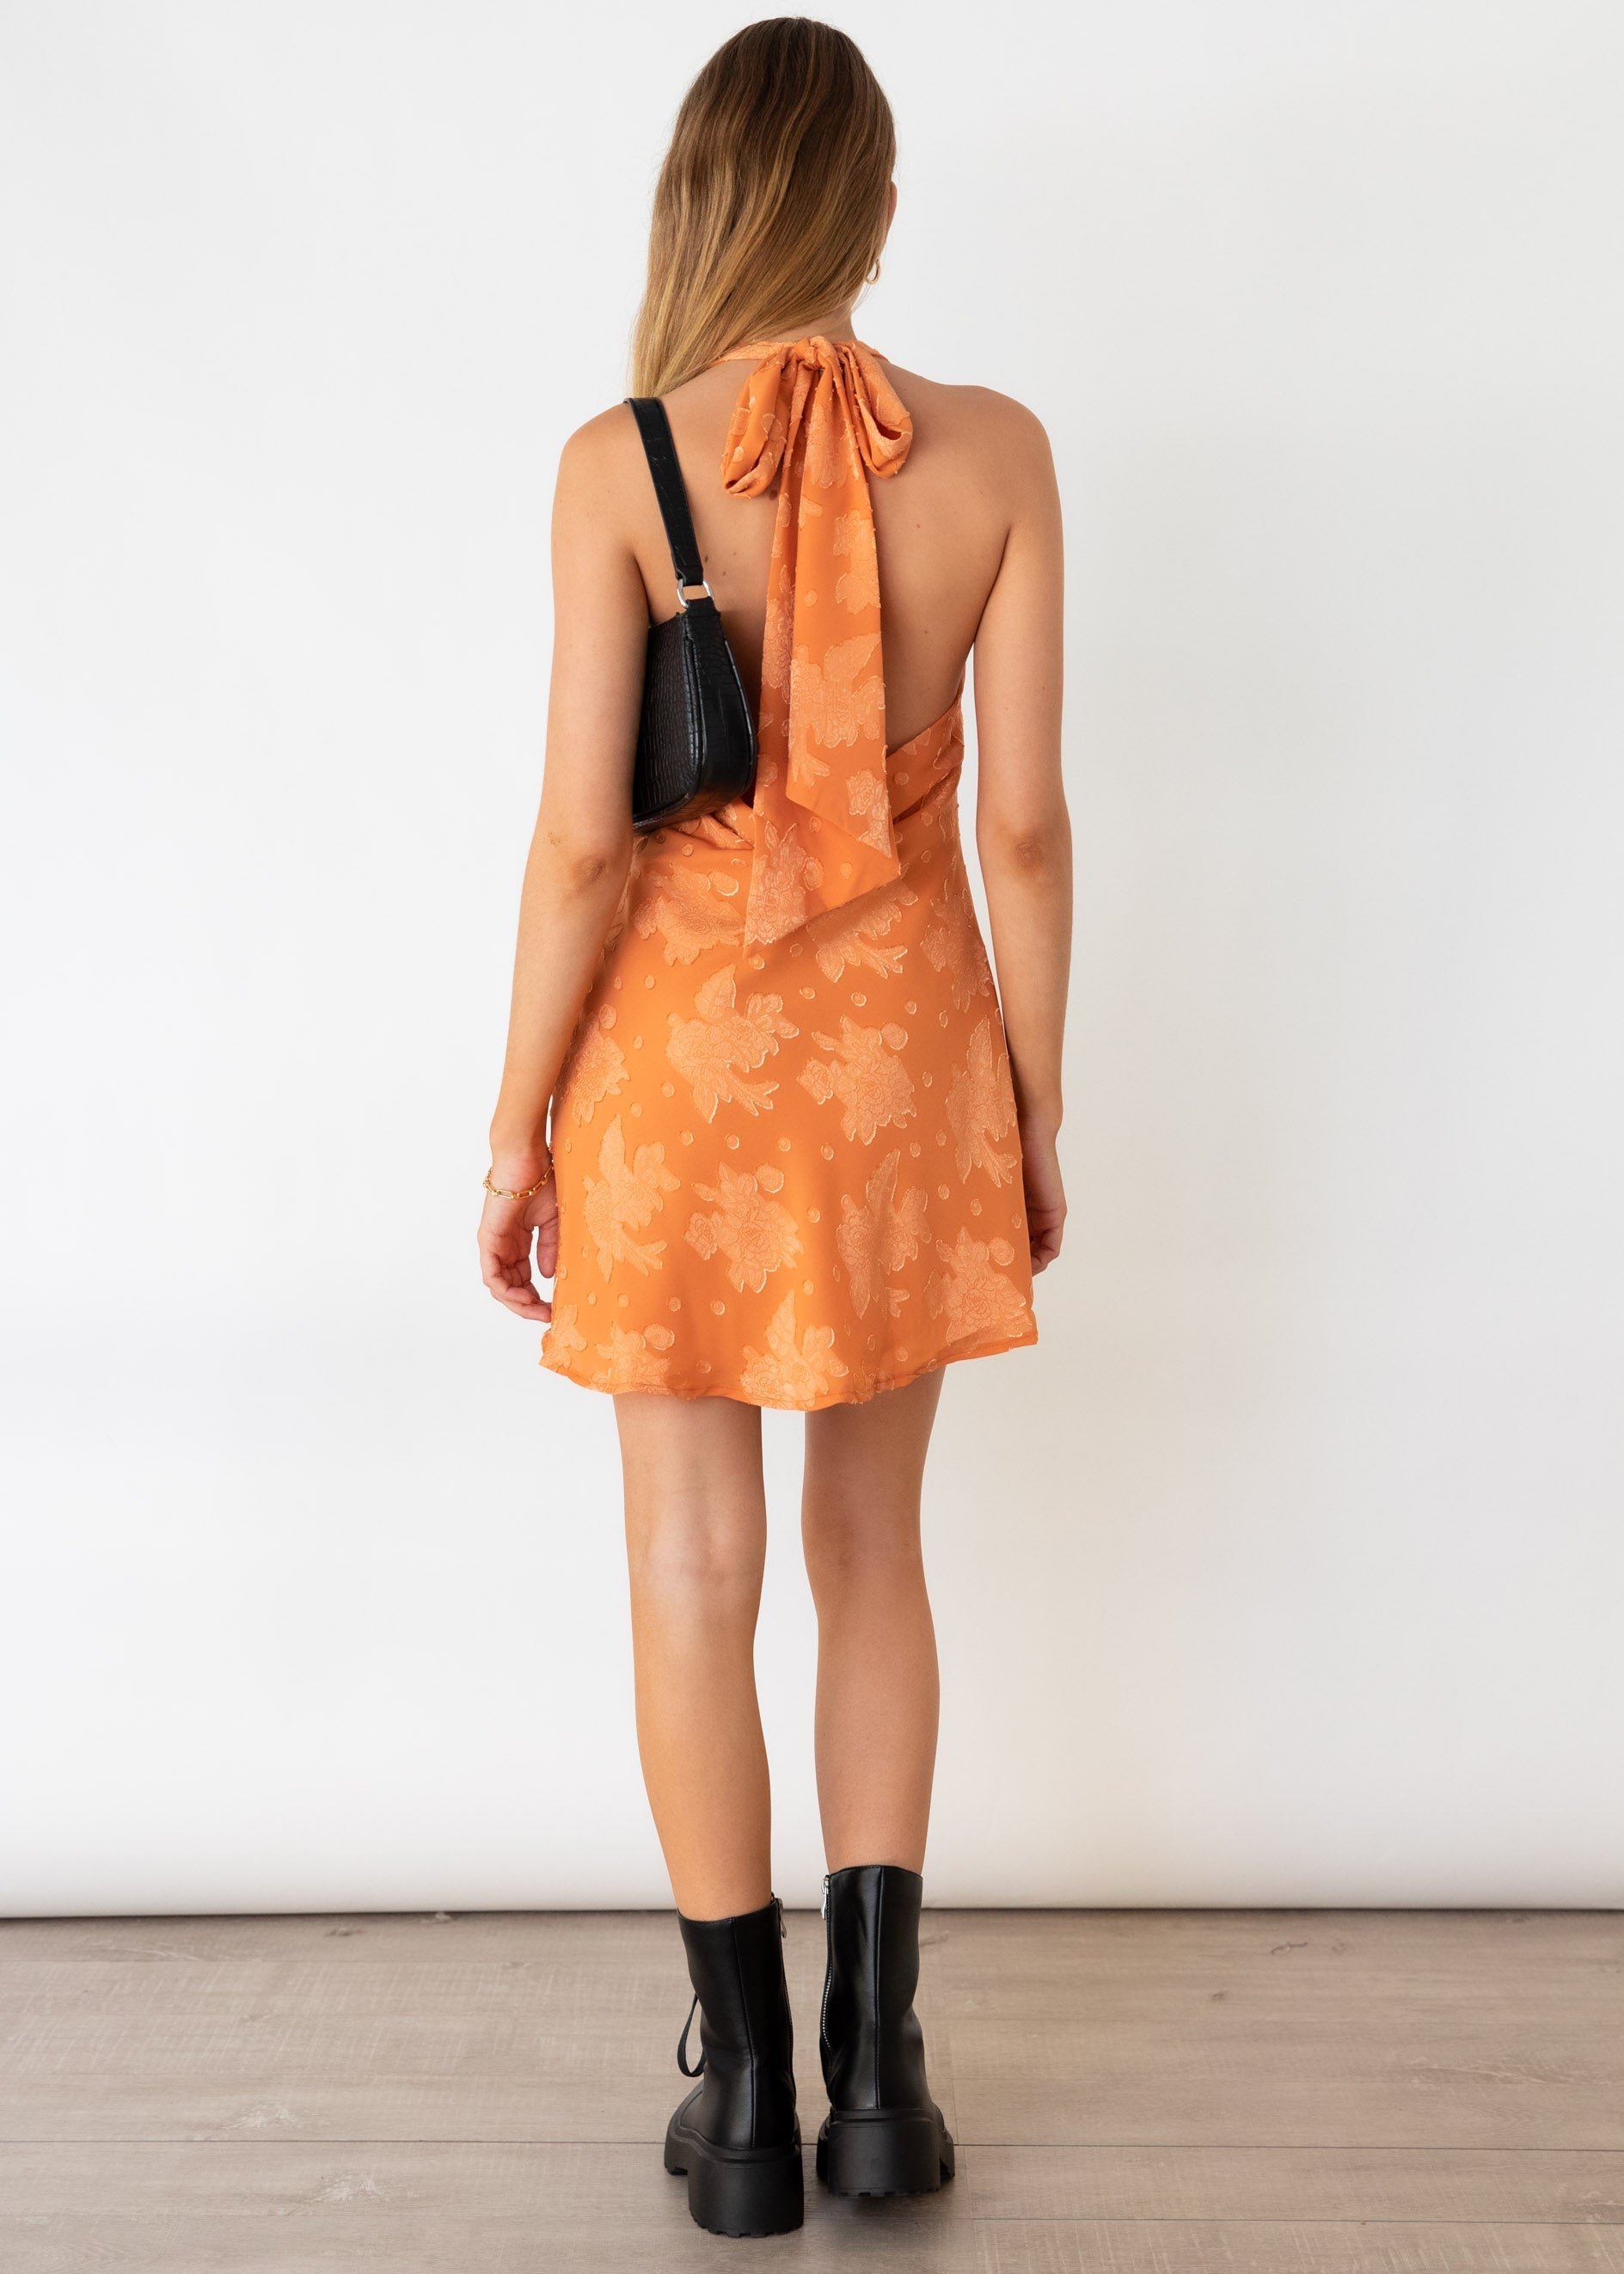 Brooklee Halter Dress - Tangerine